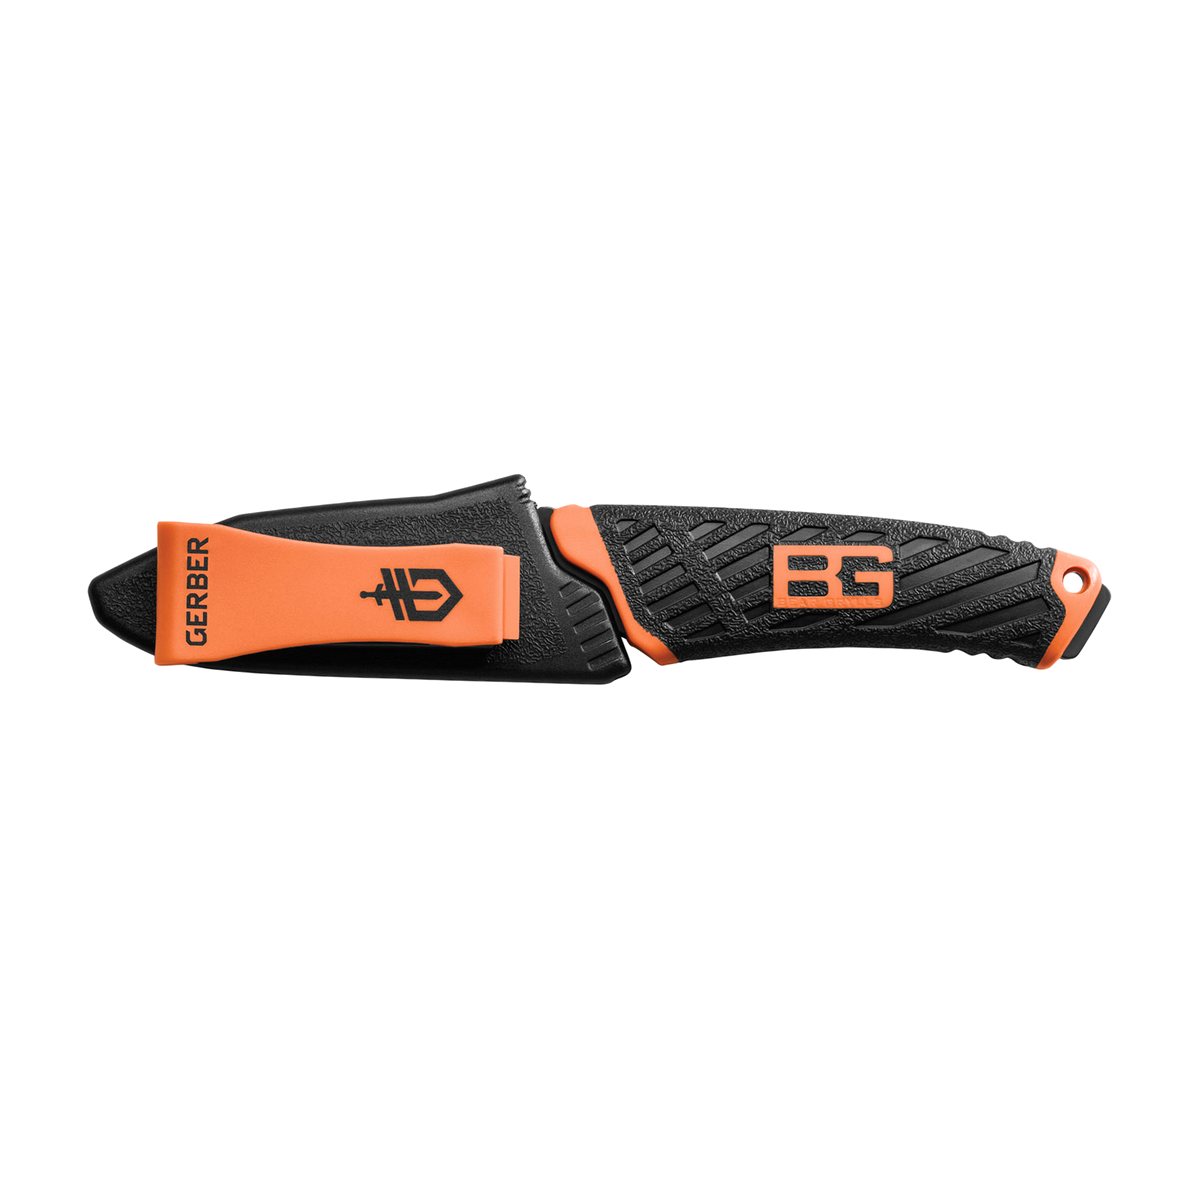 -  Gerber Bear Grylls Compact Fixed Blade, Black, FE, , 31-002946